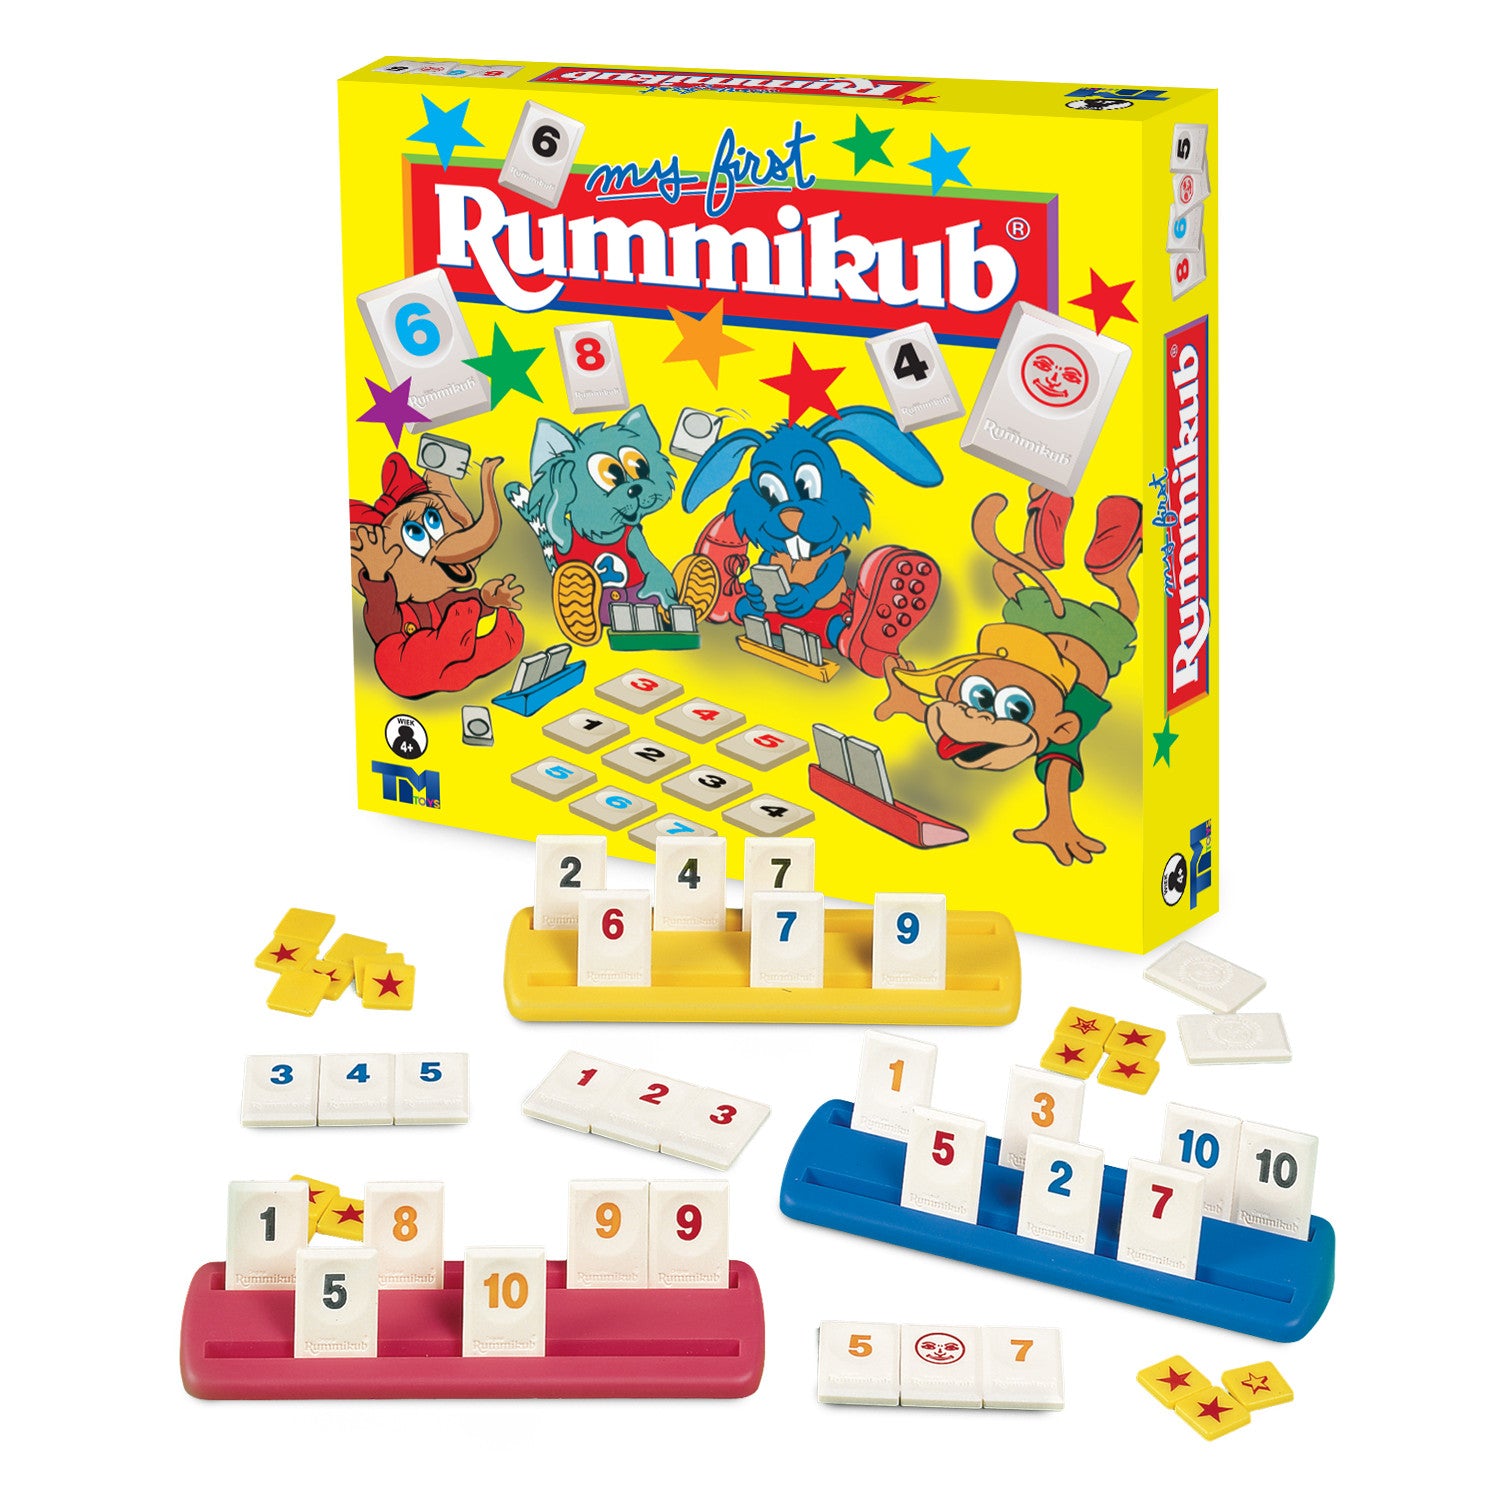 How to play Rummikub 